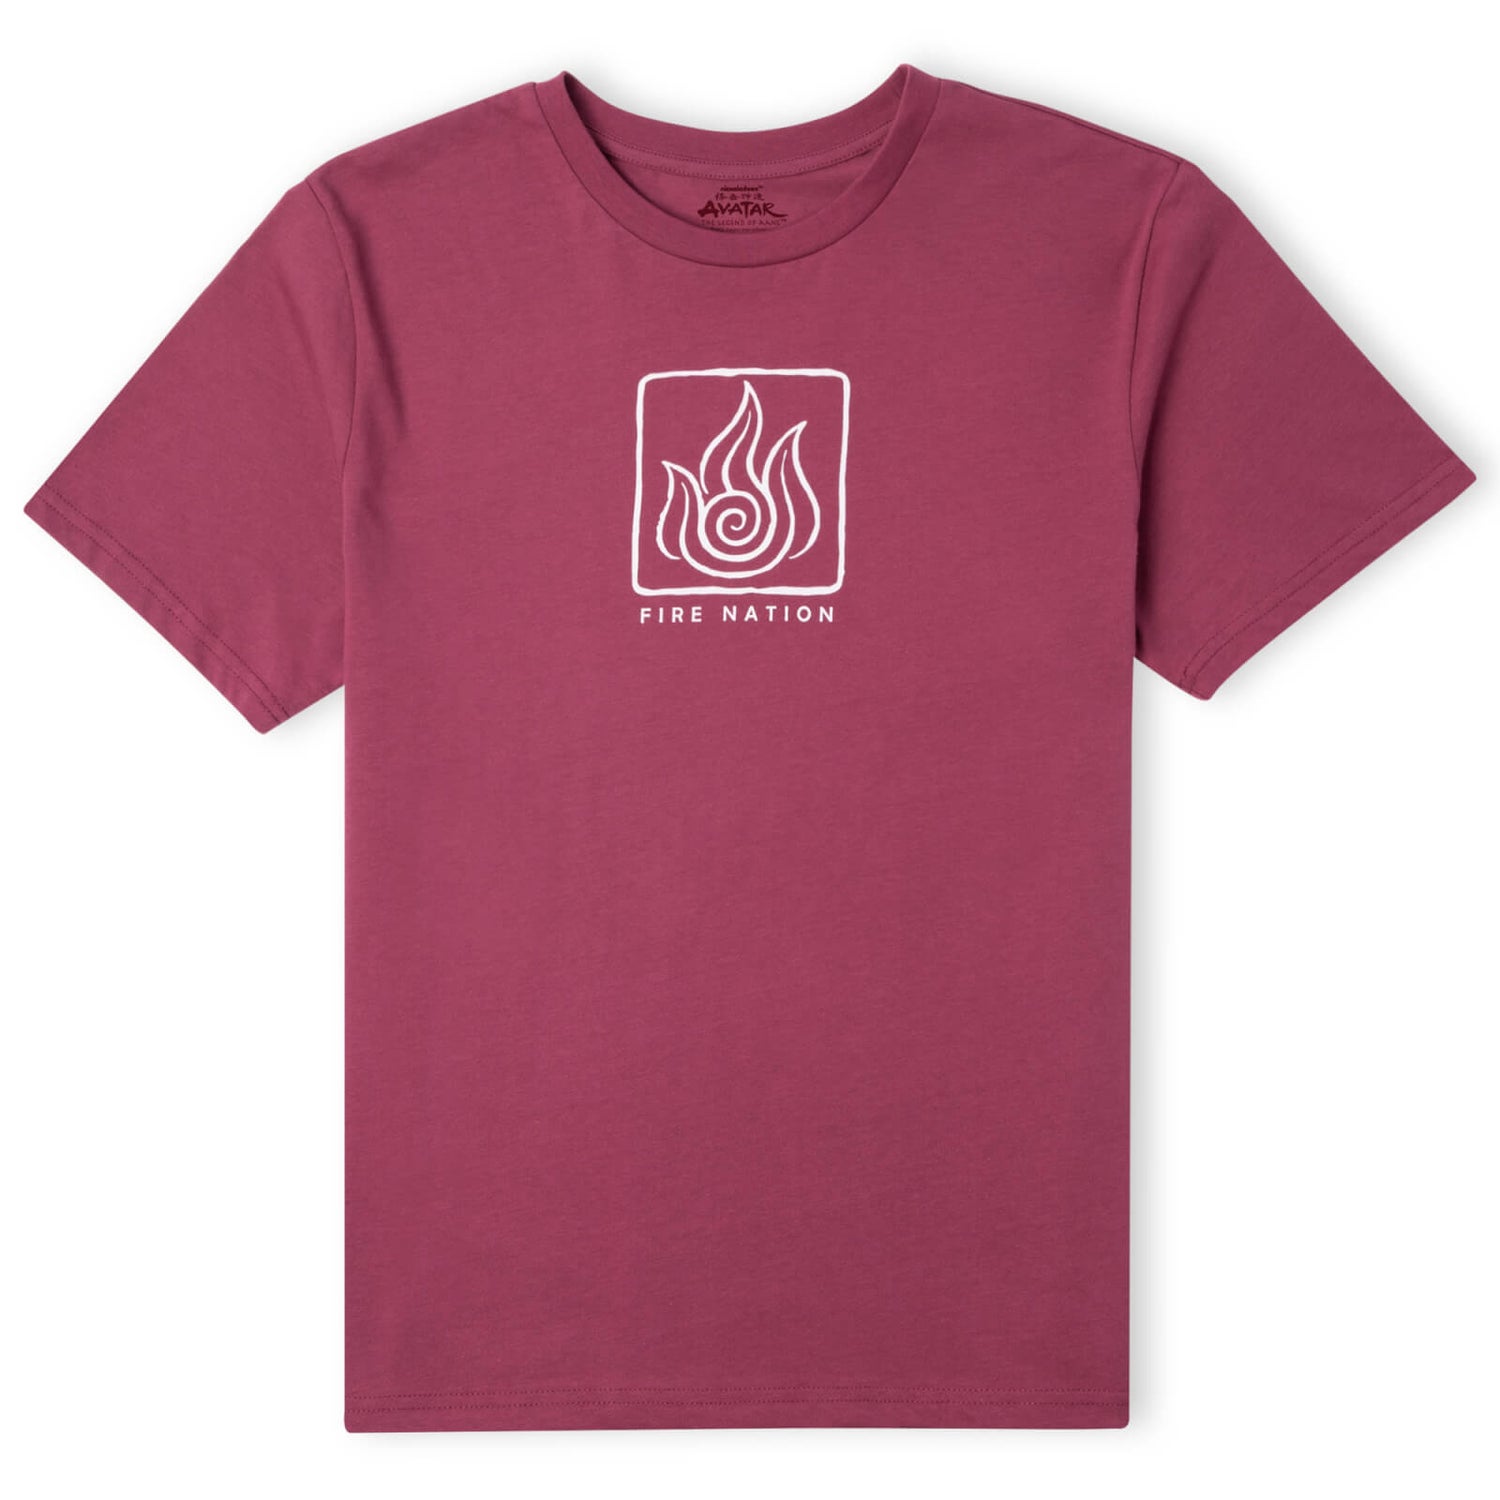 Camiseta unisex Avatar Fire Nation - Borgoña